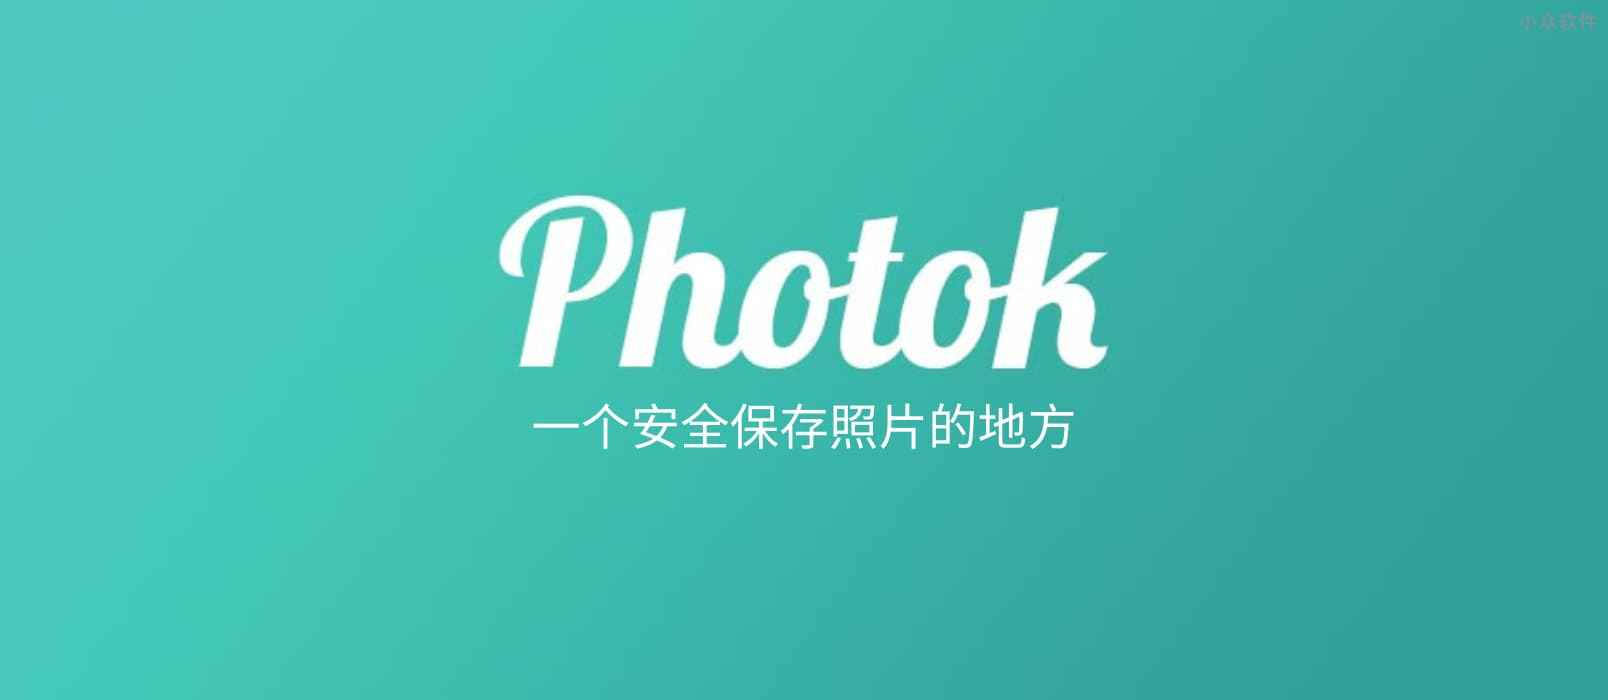 Photok – 一个安全存放照片的地方[Android]